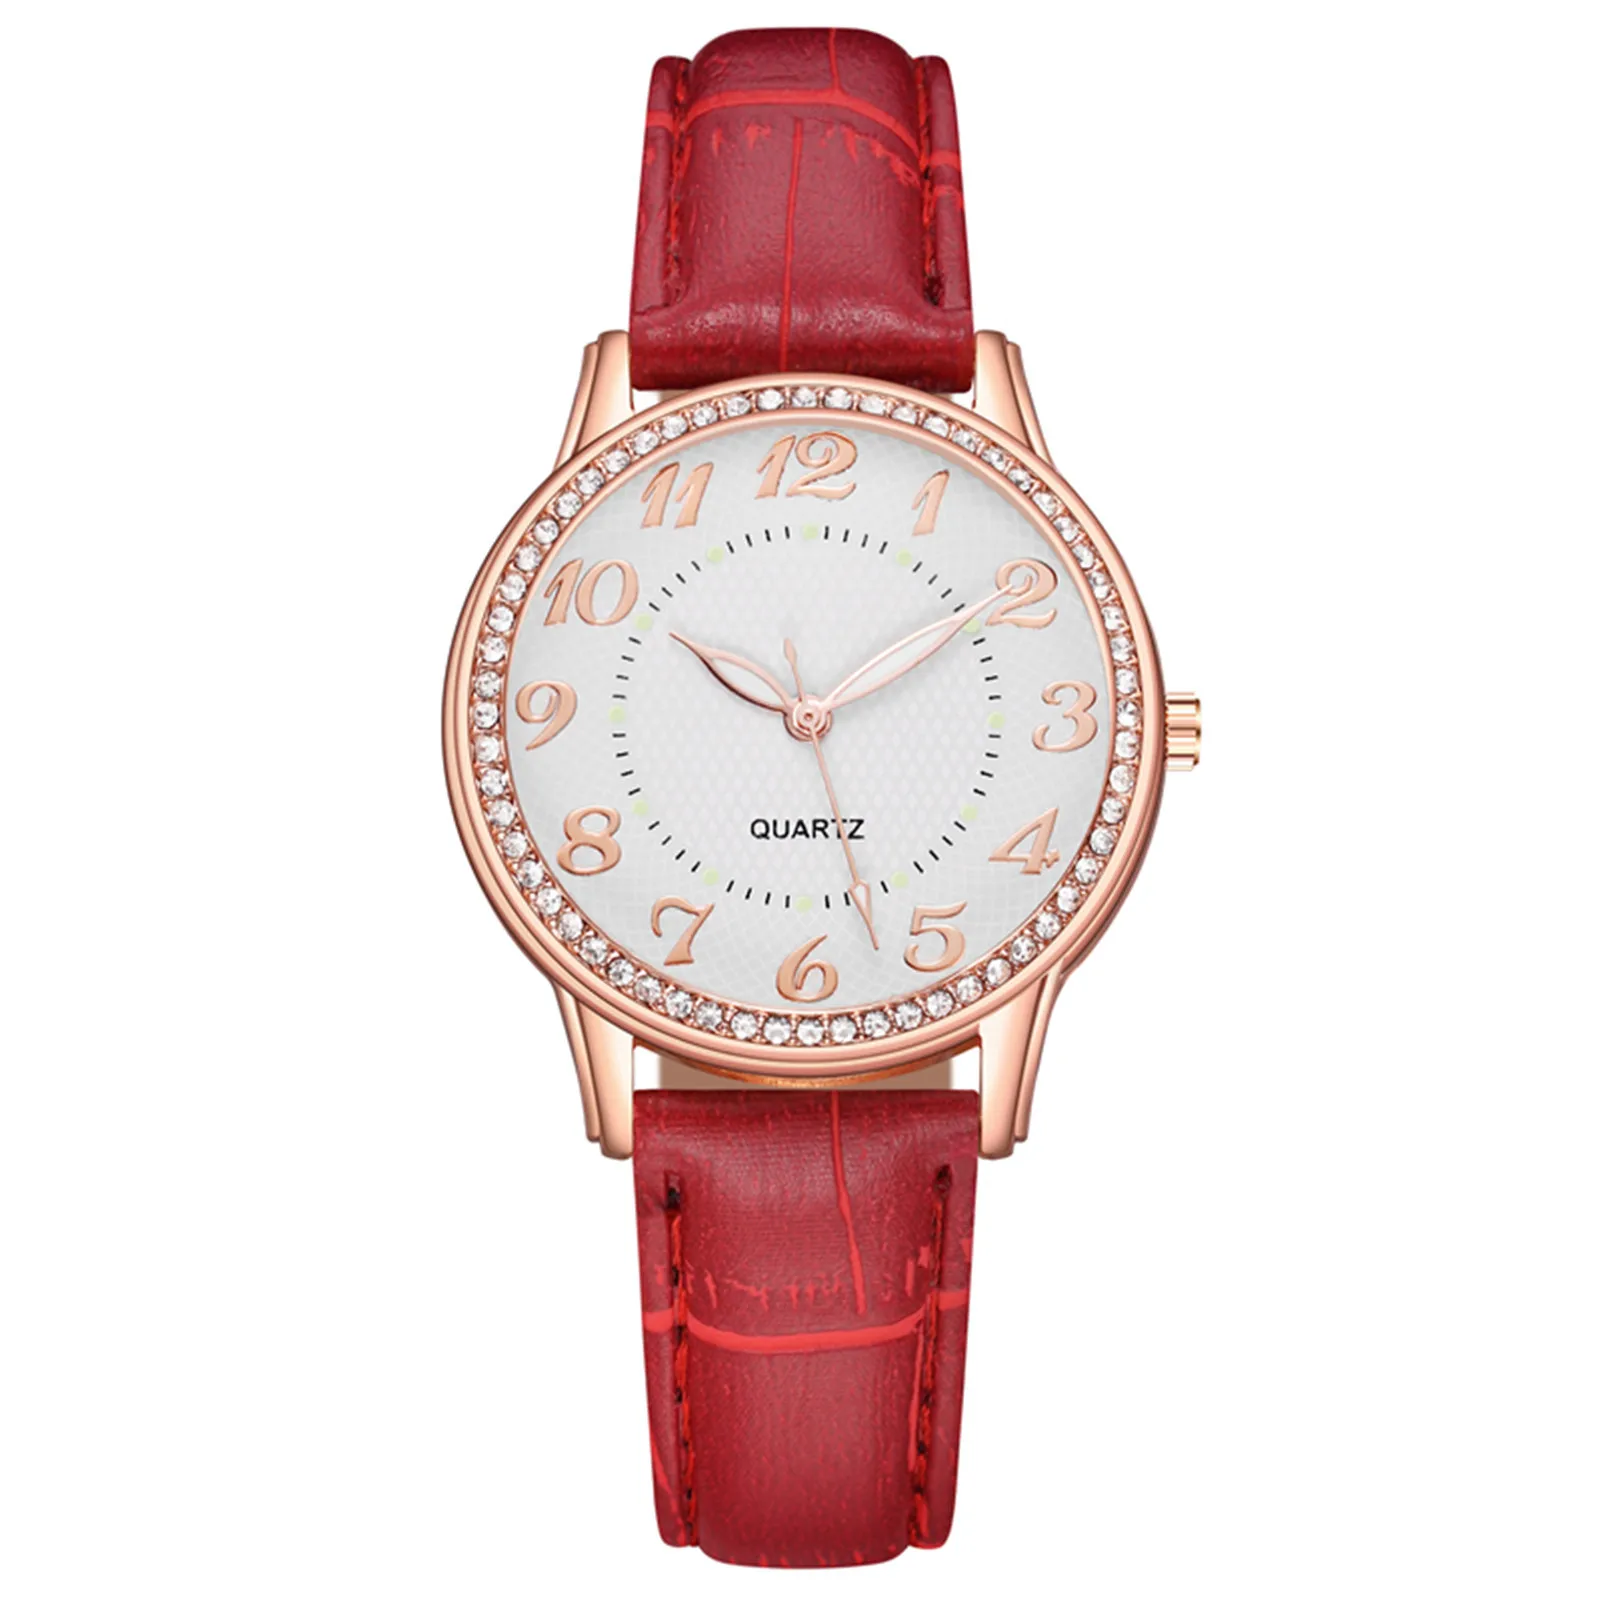 Top Brand Luxury Waterproof Watch Simple Style Red Leather Watches Ladies Diamond Luxury Fashion Belt Watch часы женские